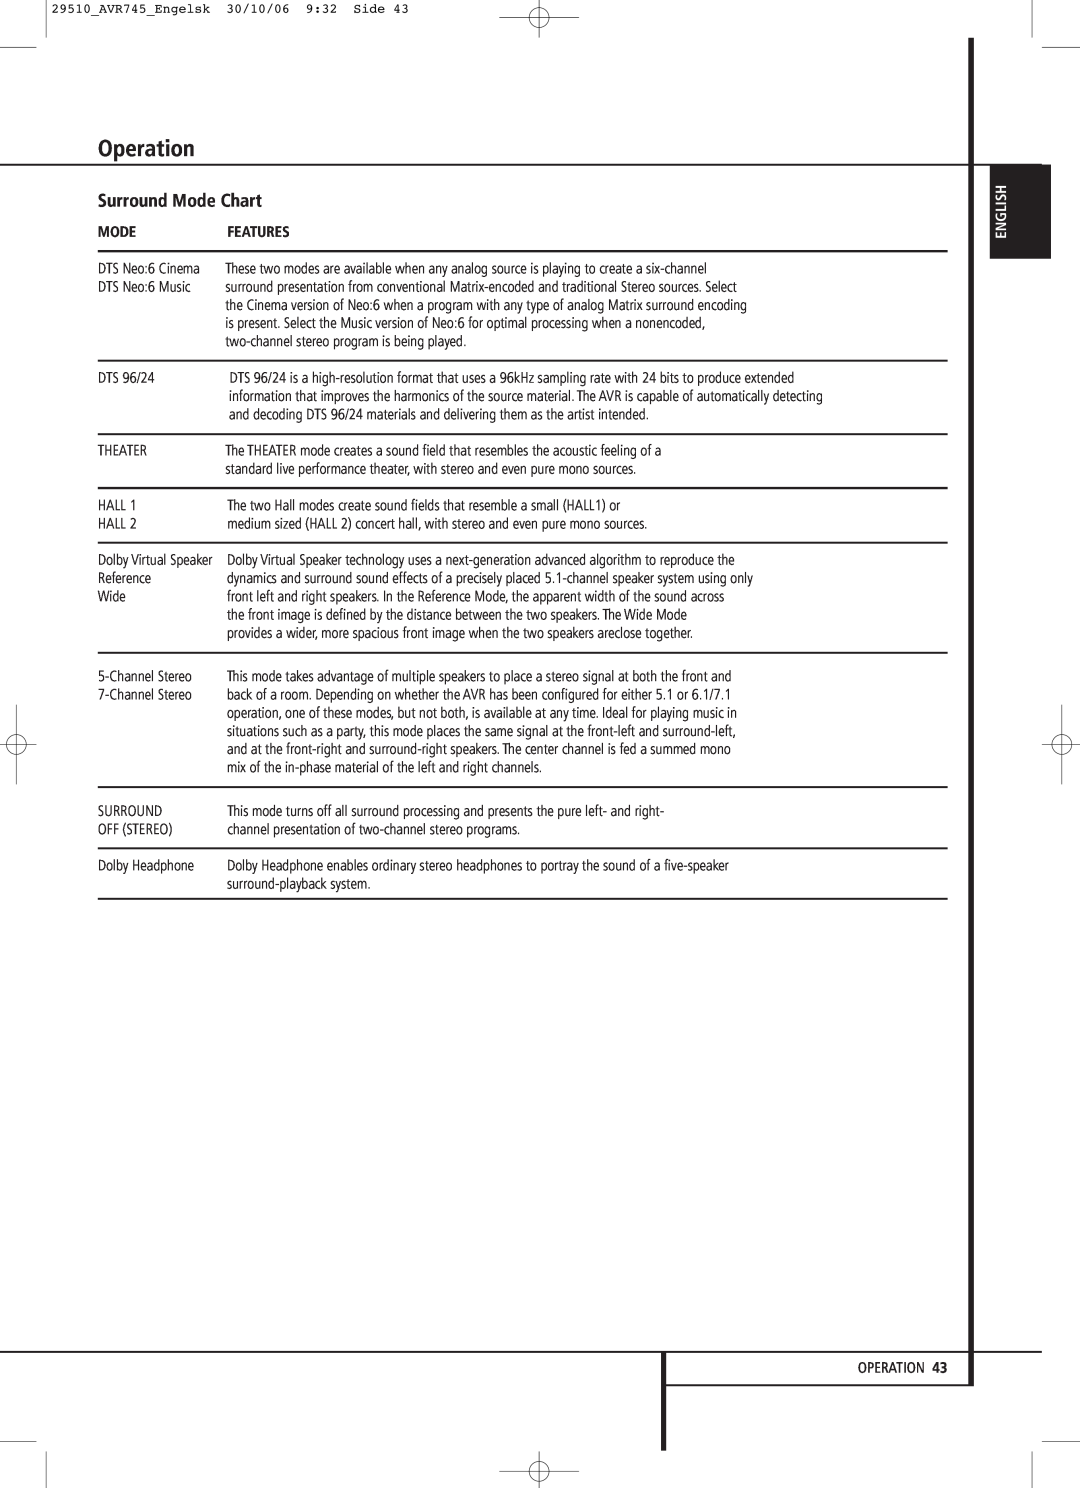 Harman-Kardon AVR 745 owner manual Operation, Surround Mode Chart, Features, English 